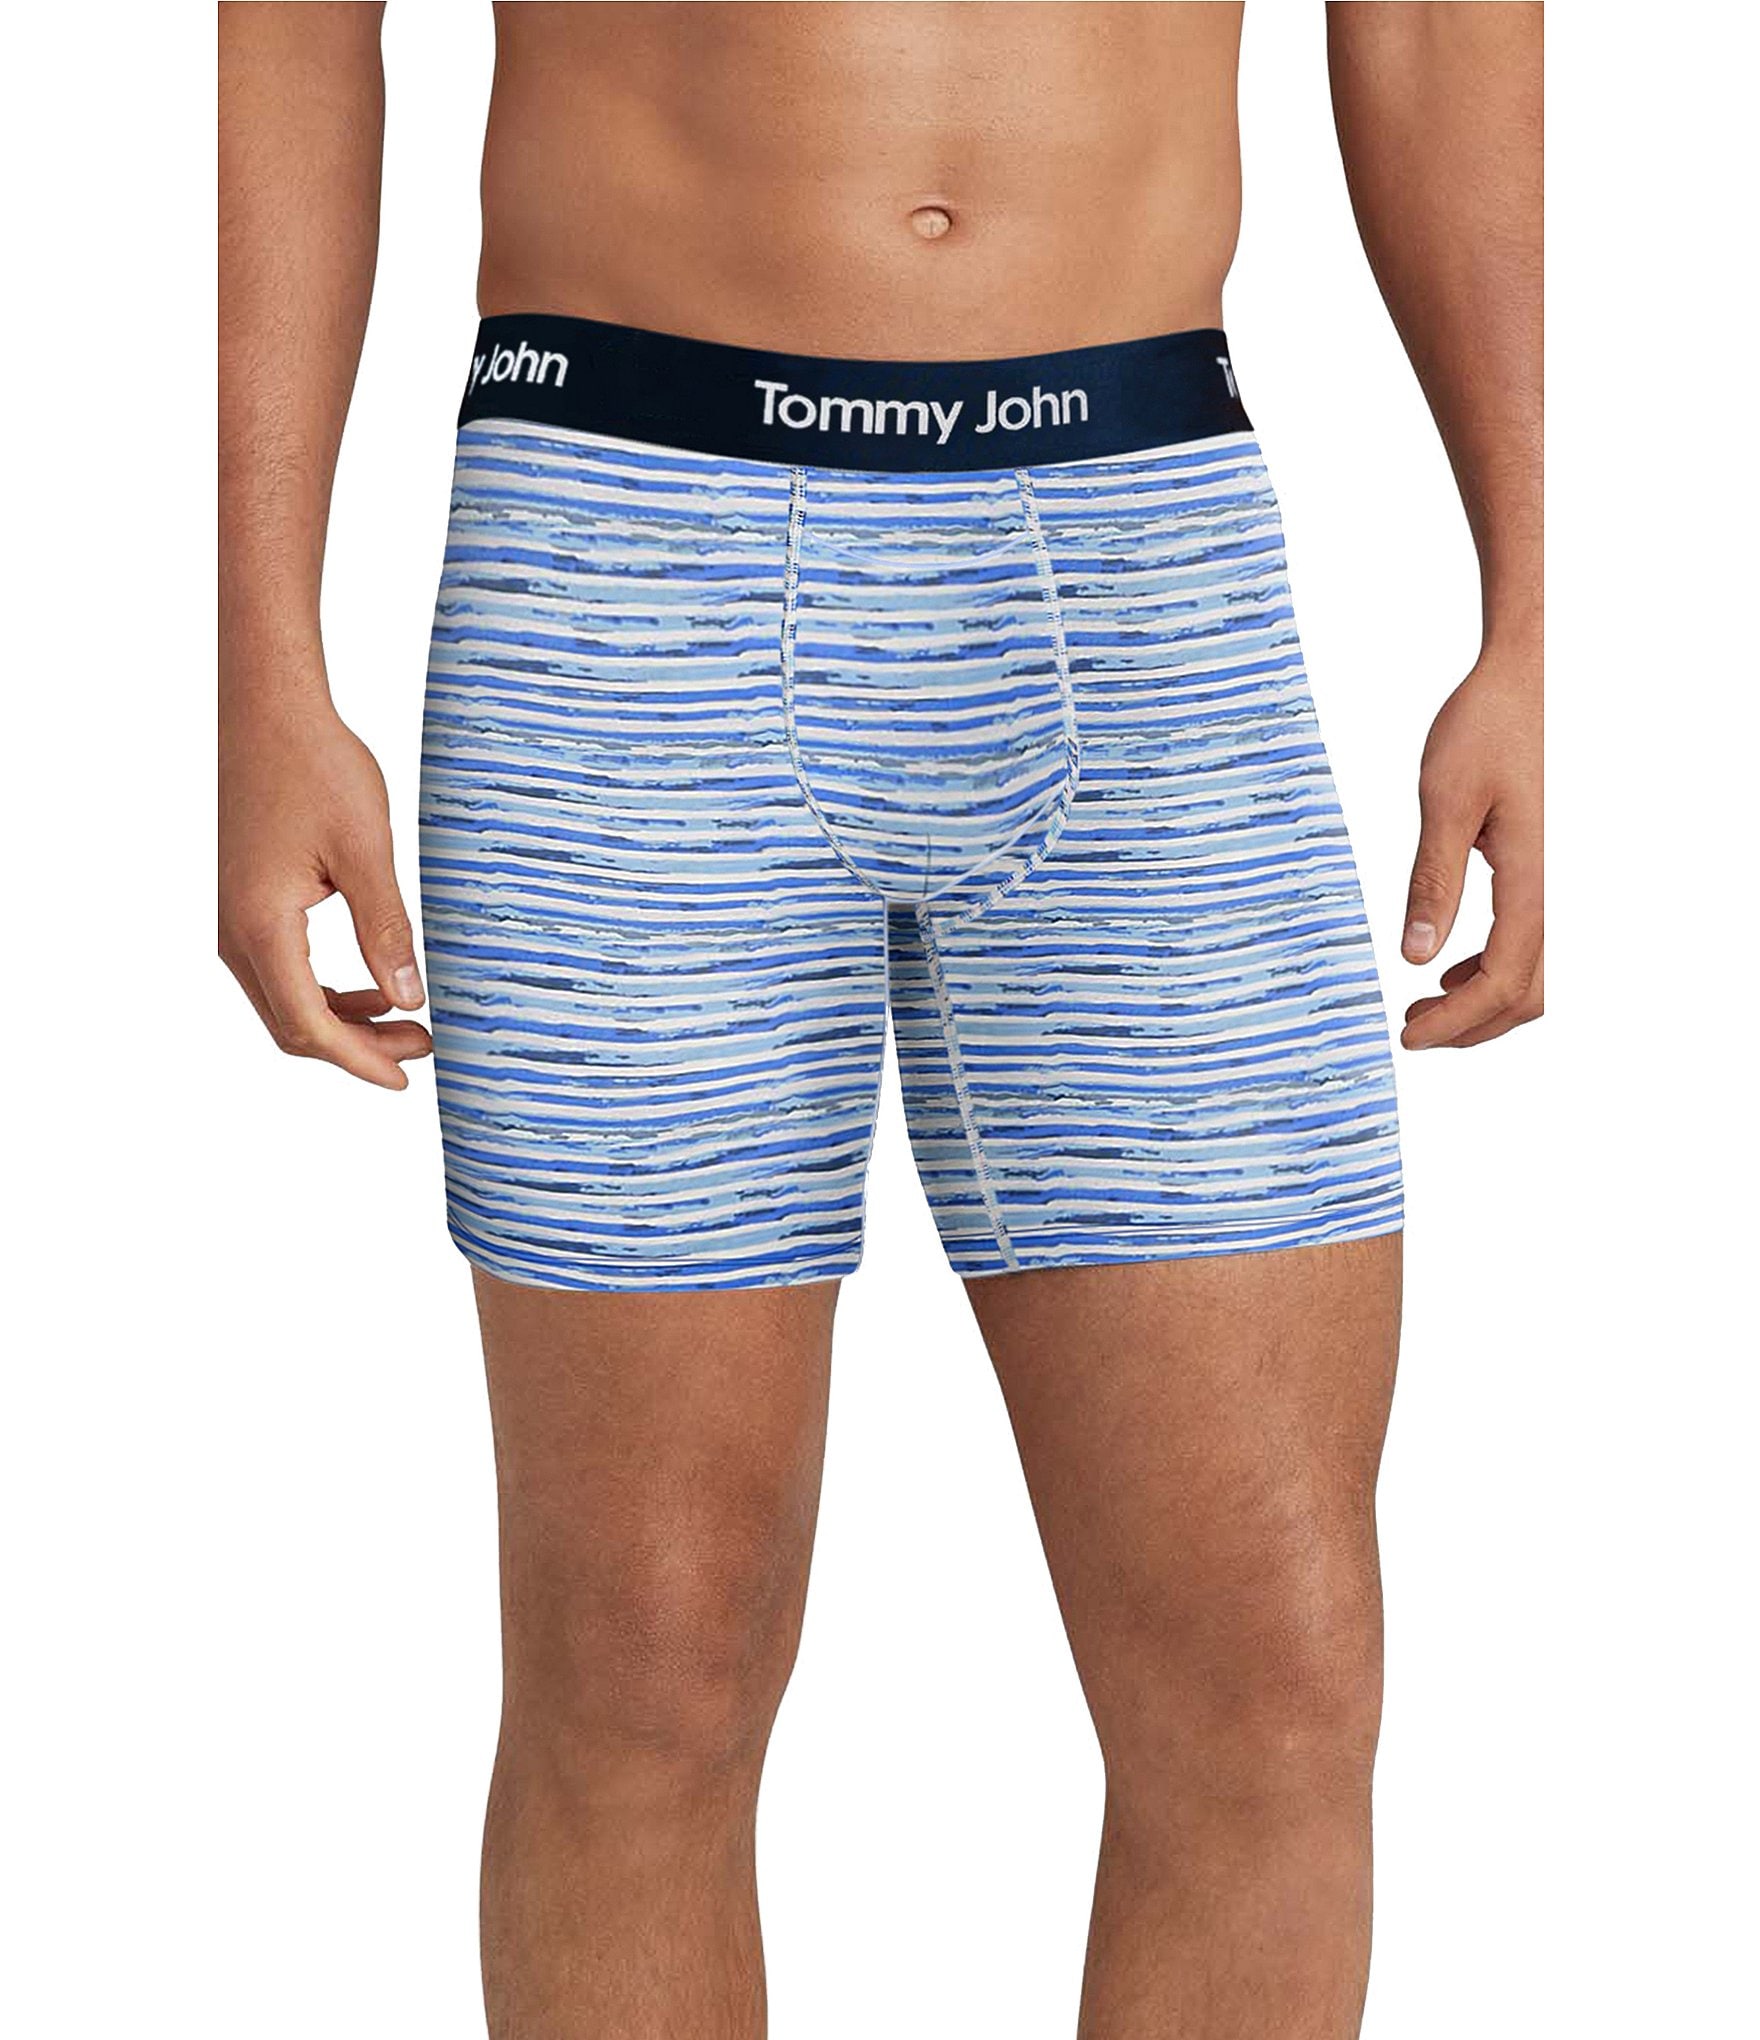 New Tommy John Go Anywhere Men's Trunk Underwear XL